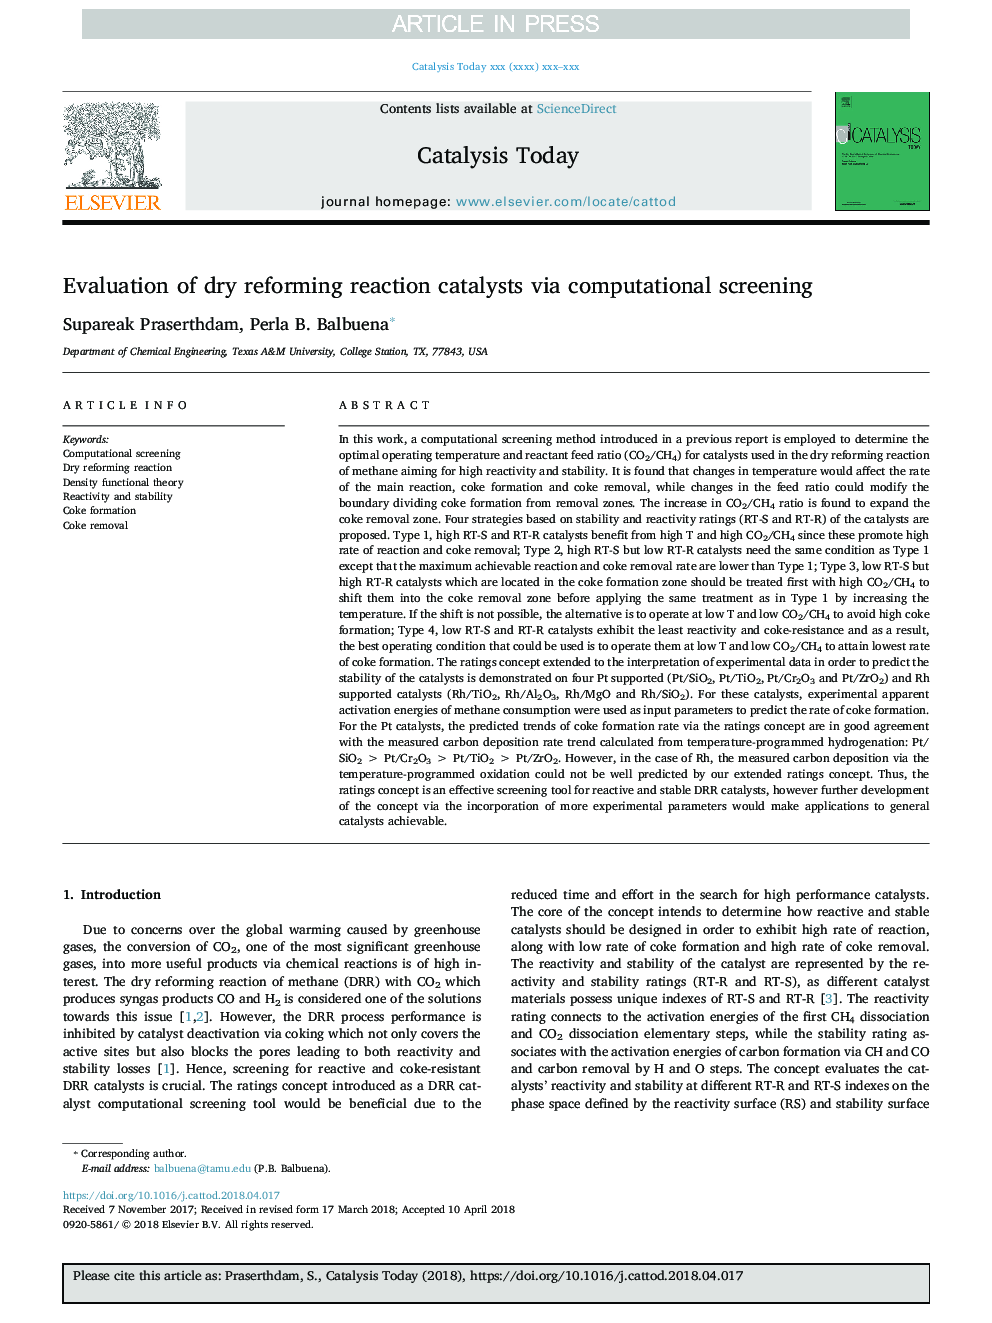 Evaluation of dry reforming reaction catalysts via computational screening